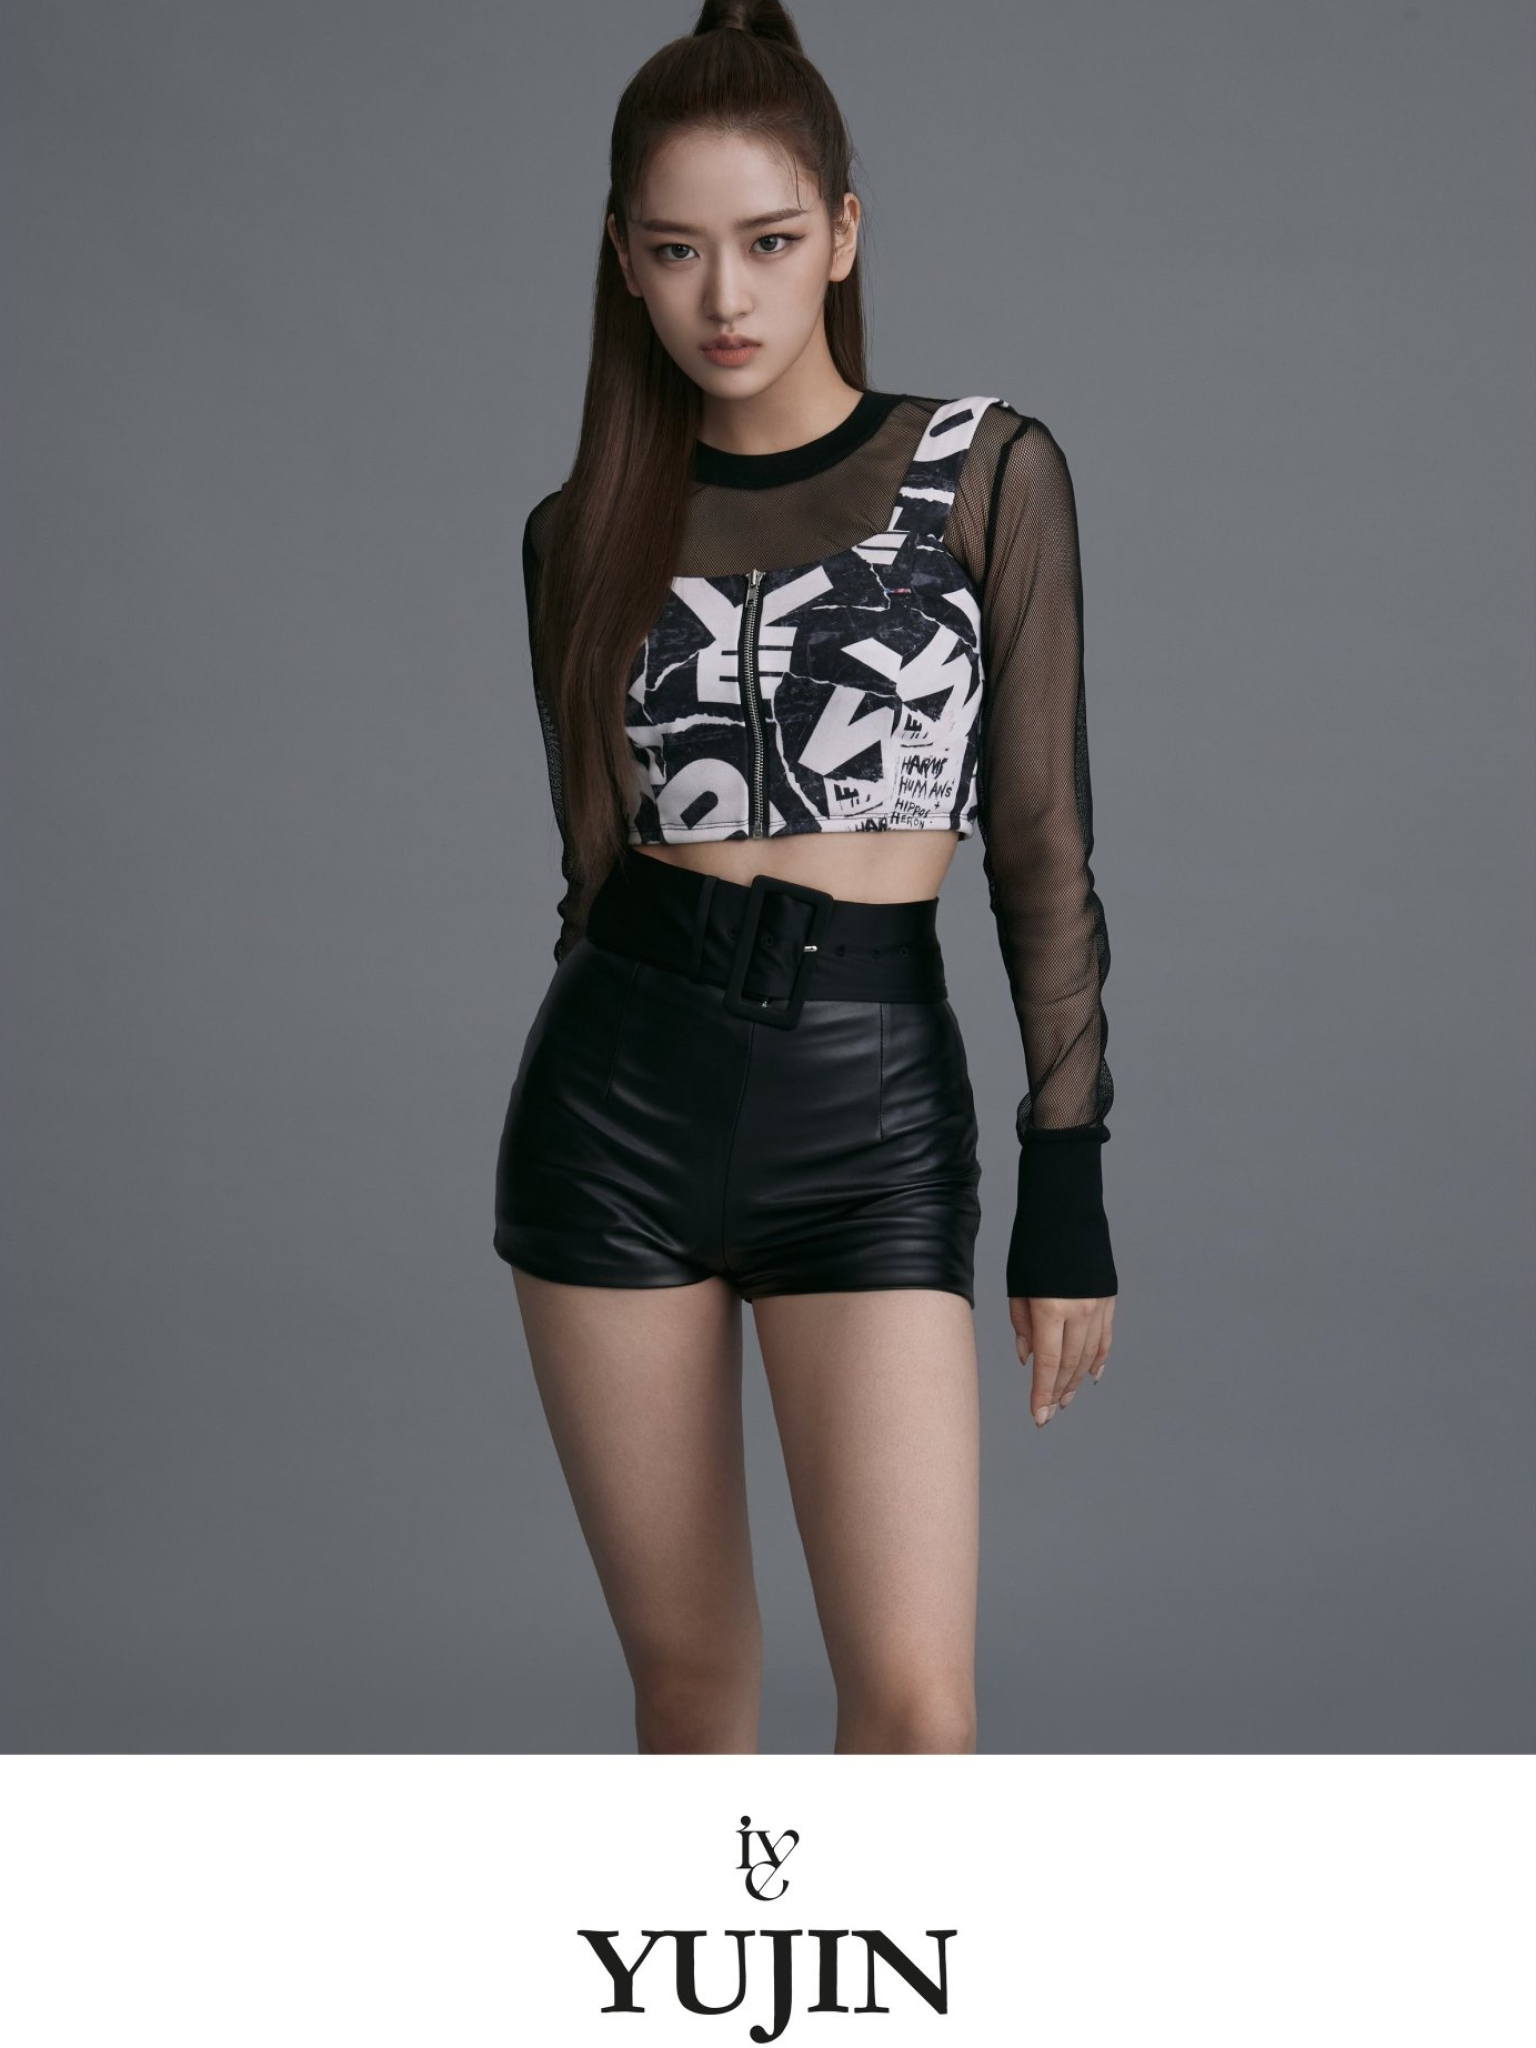 Starship's girl group, Ive confirms, An Yu Jin, Profile photos, 1540x2050 HD Handy